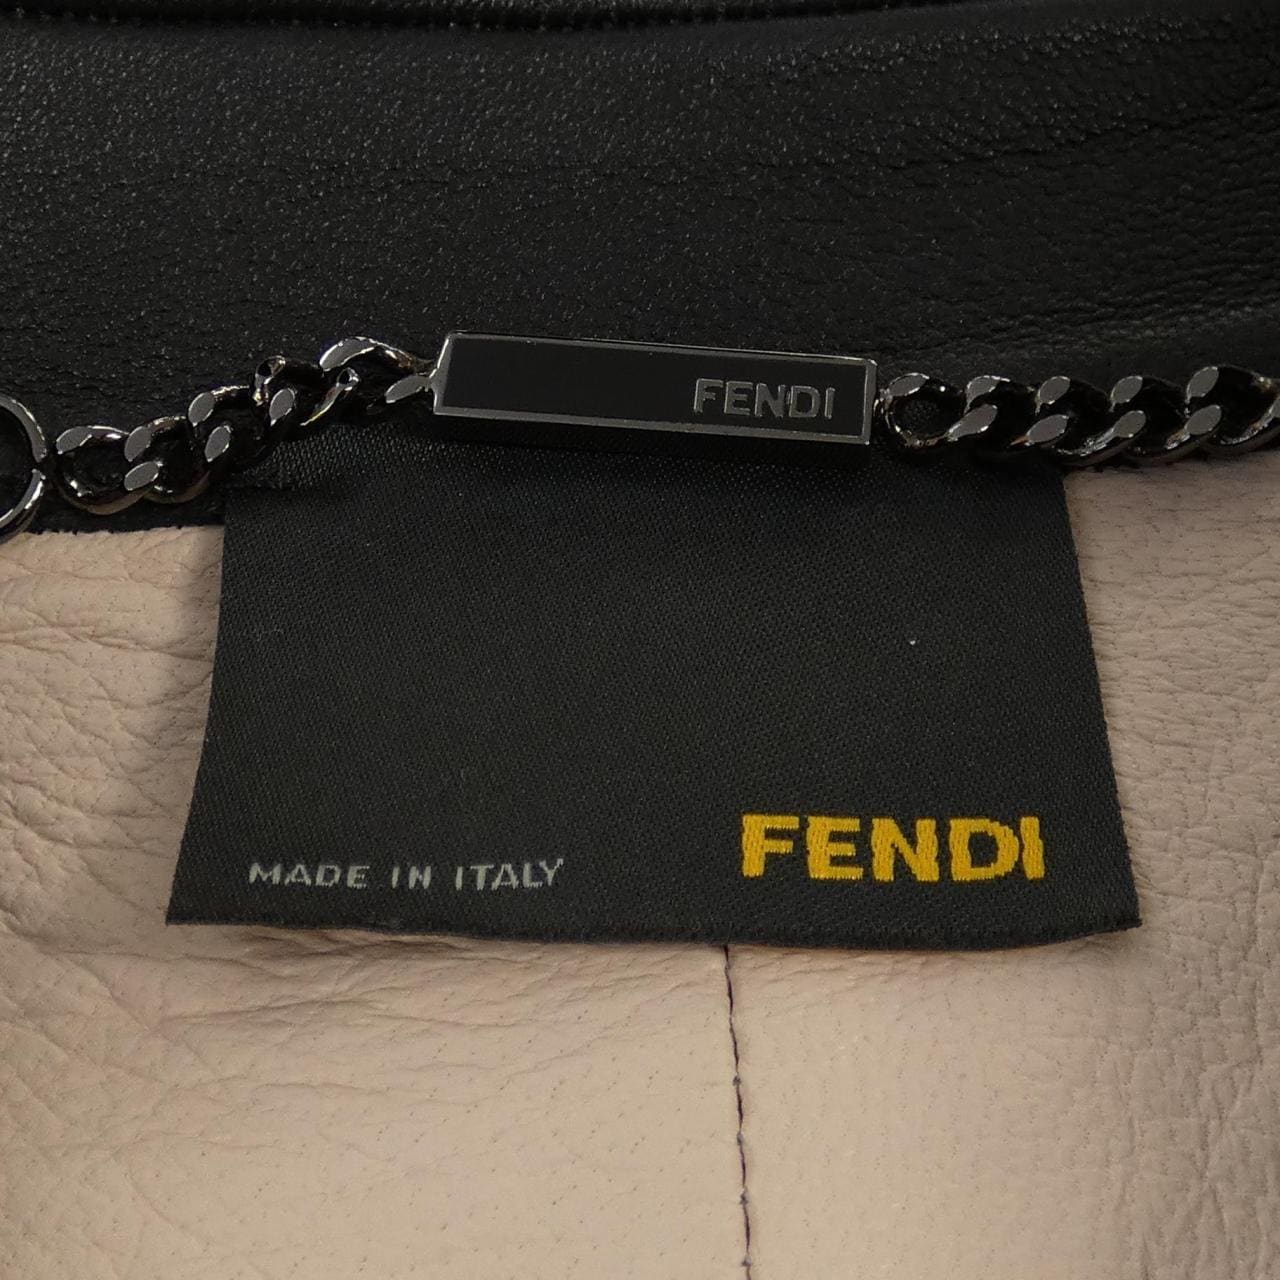 FENDI leather coat